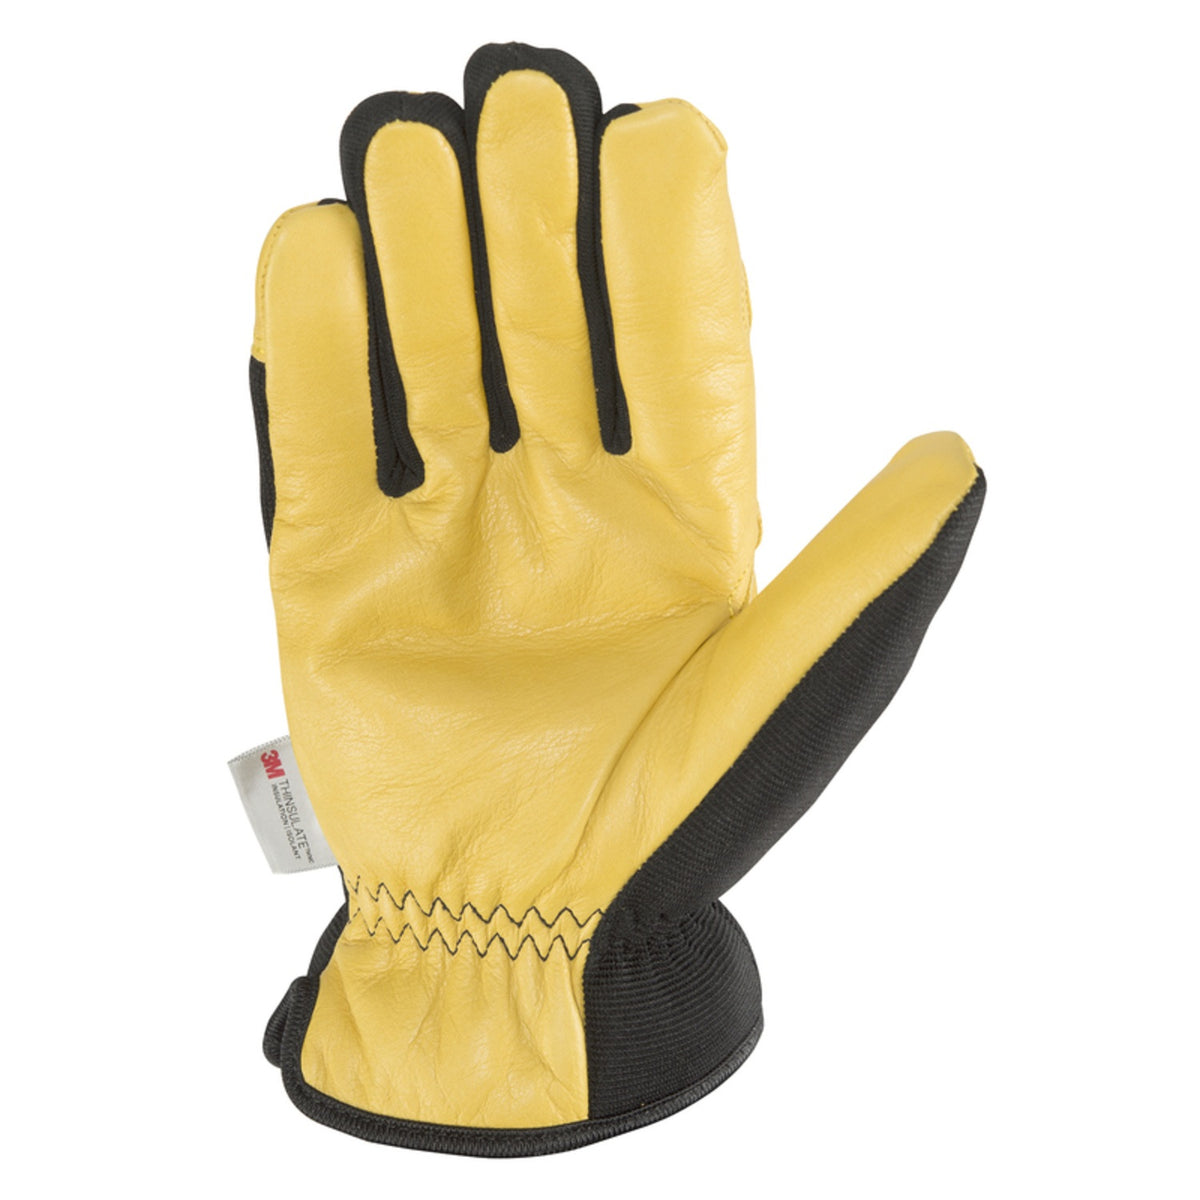 Wells Lamont 3223M Saddletan Grain Winter Work Gloves, Black/Yellow, M